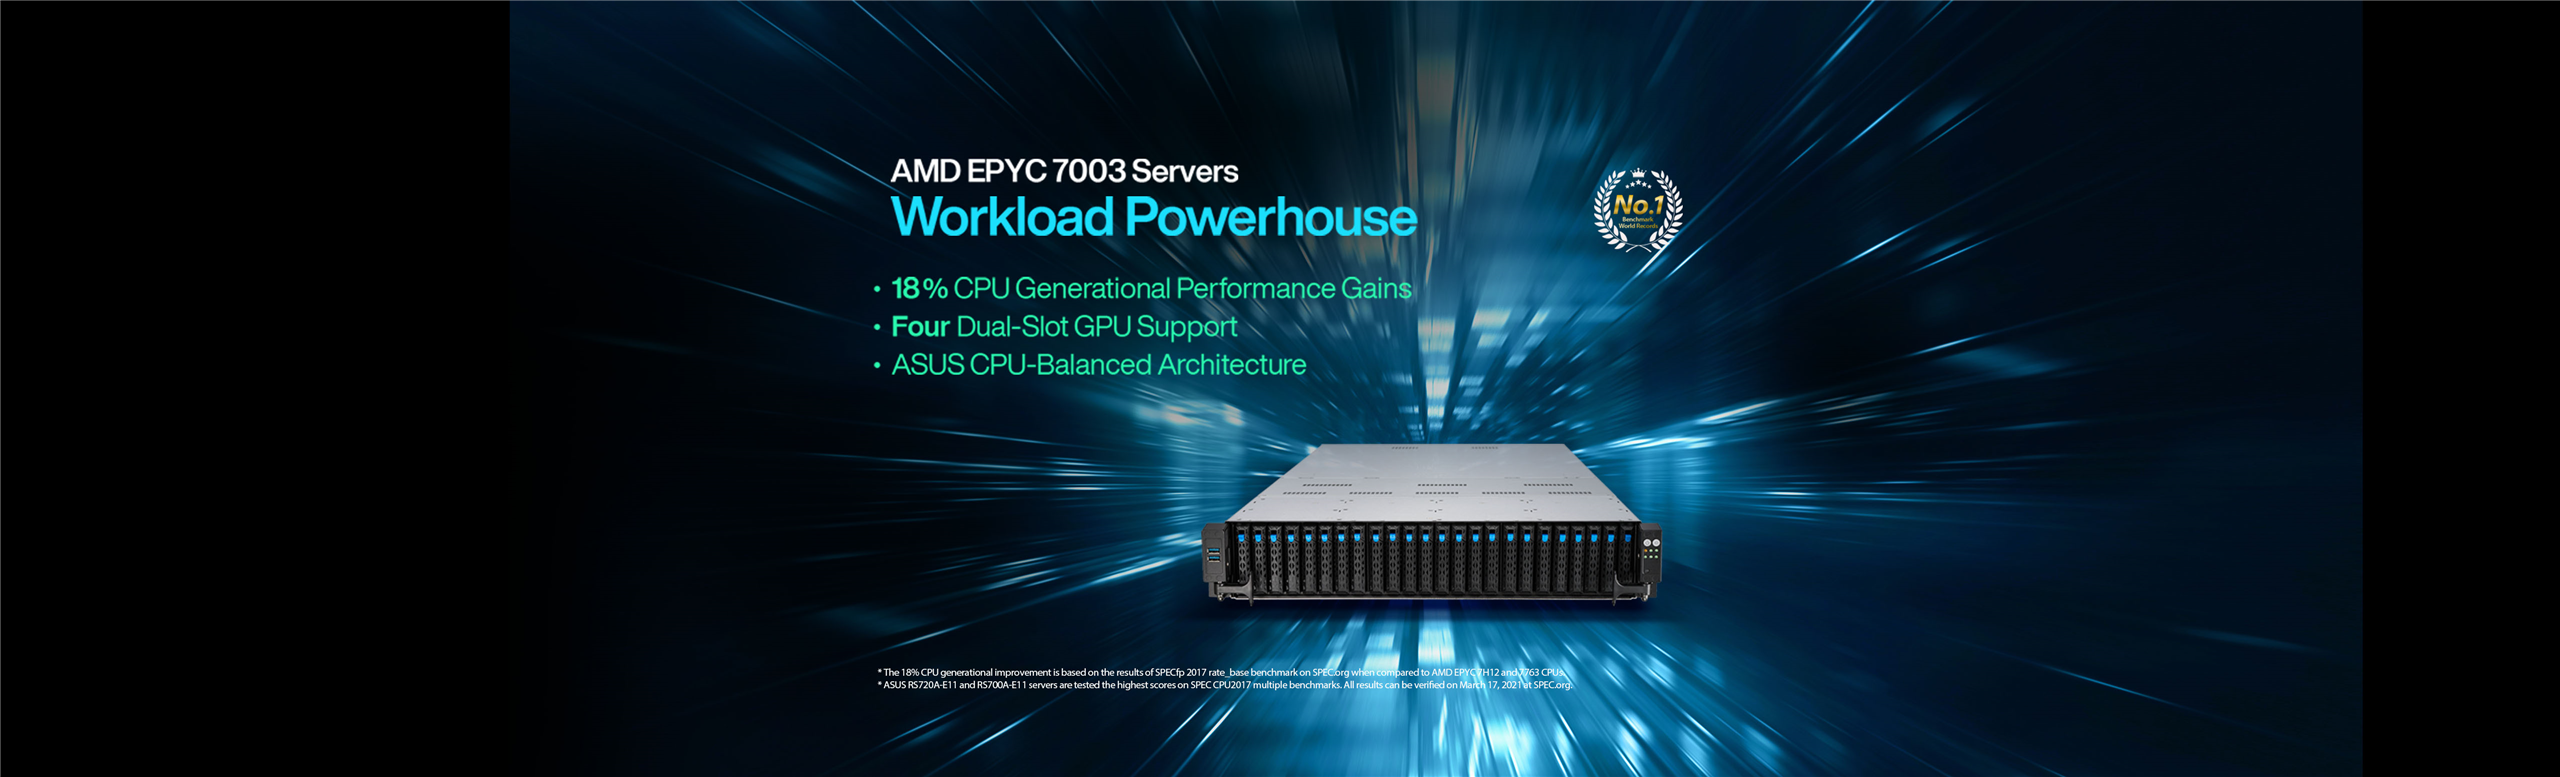 A server room senario photo to showcase ASUS power balancer technology can save up to 31 watts of power per server node